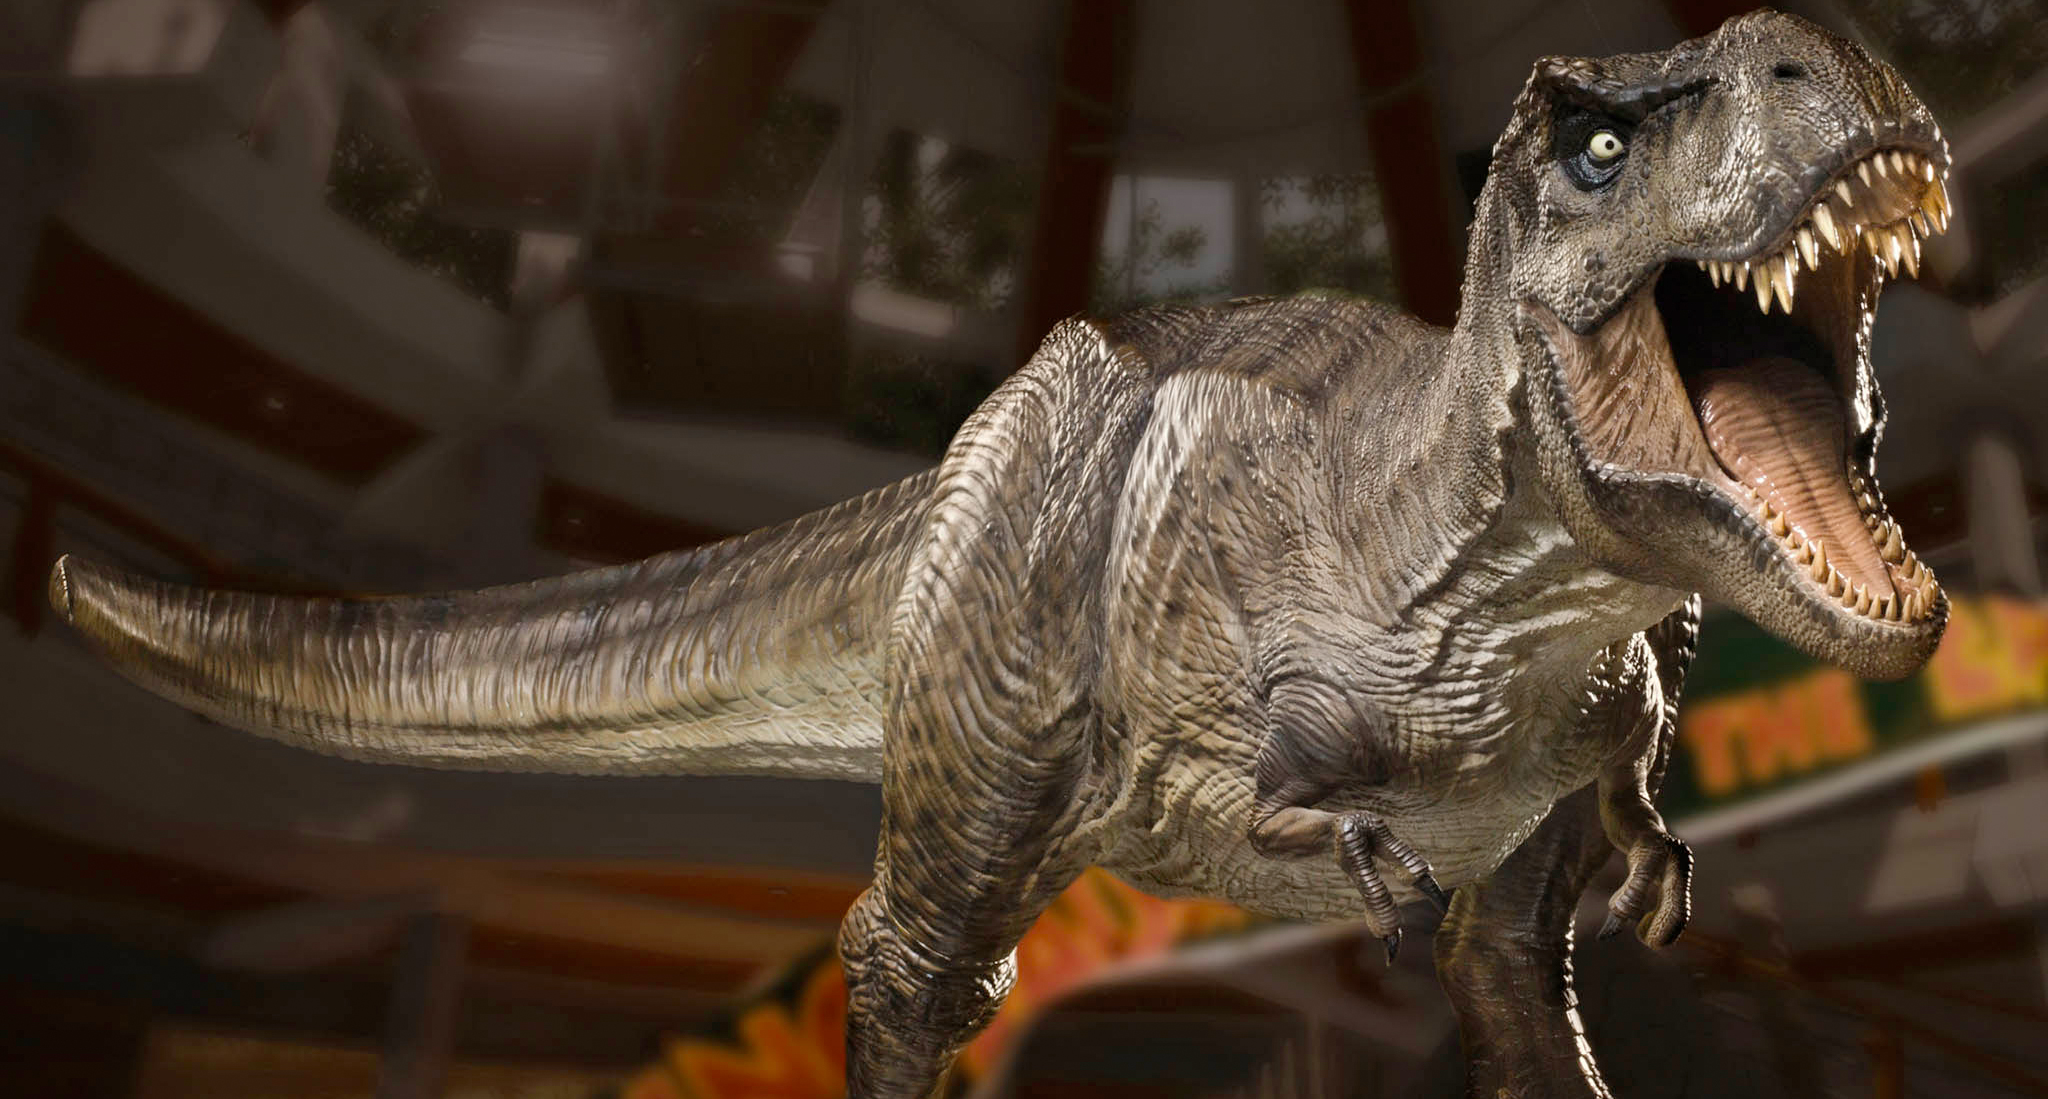 Jurassic t rex. Тираннозавр рекс мир Юрского периода. Тираннозавр рекс парк Юрского периода 2. Тираннозавр рекс парк Юрского периода 1. Тираннозавр парк Юрского периода диорама.